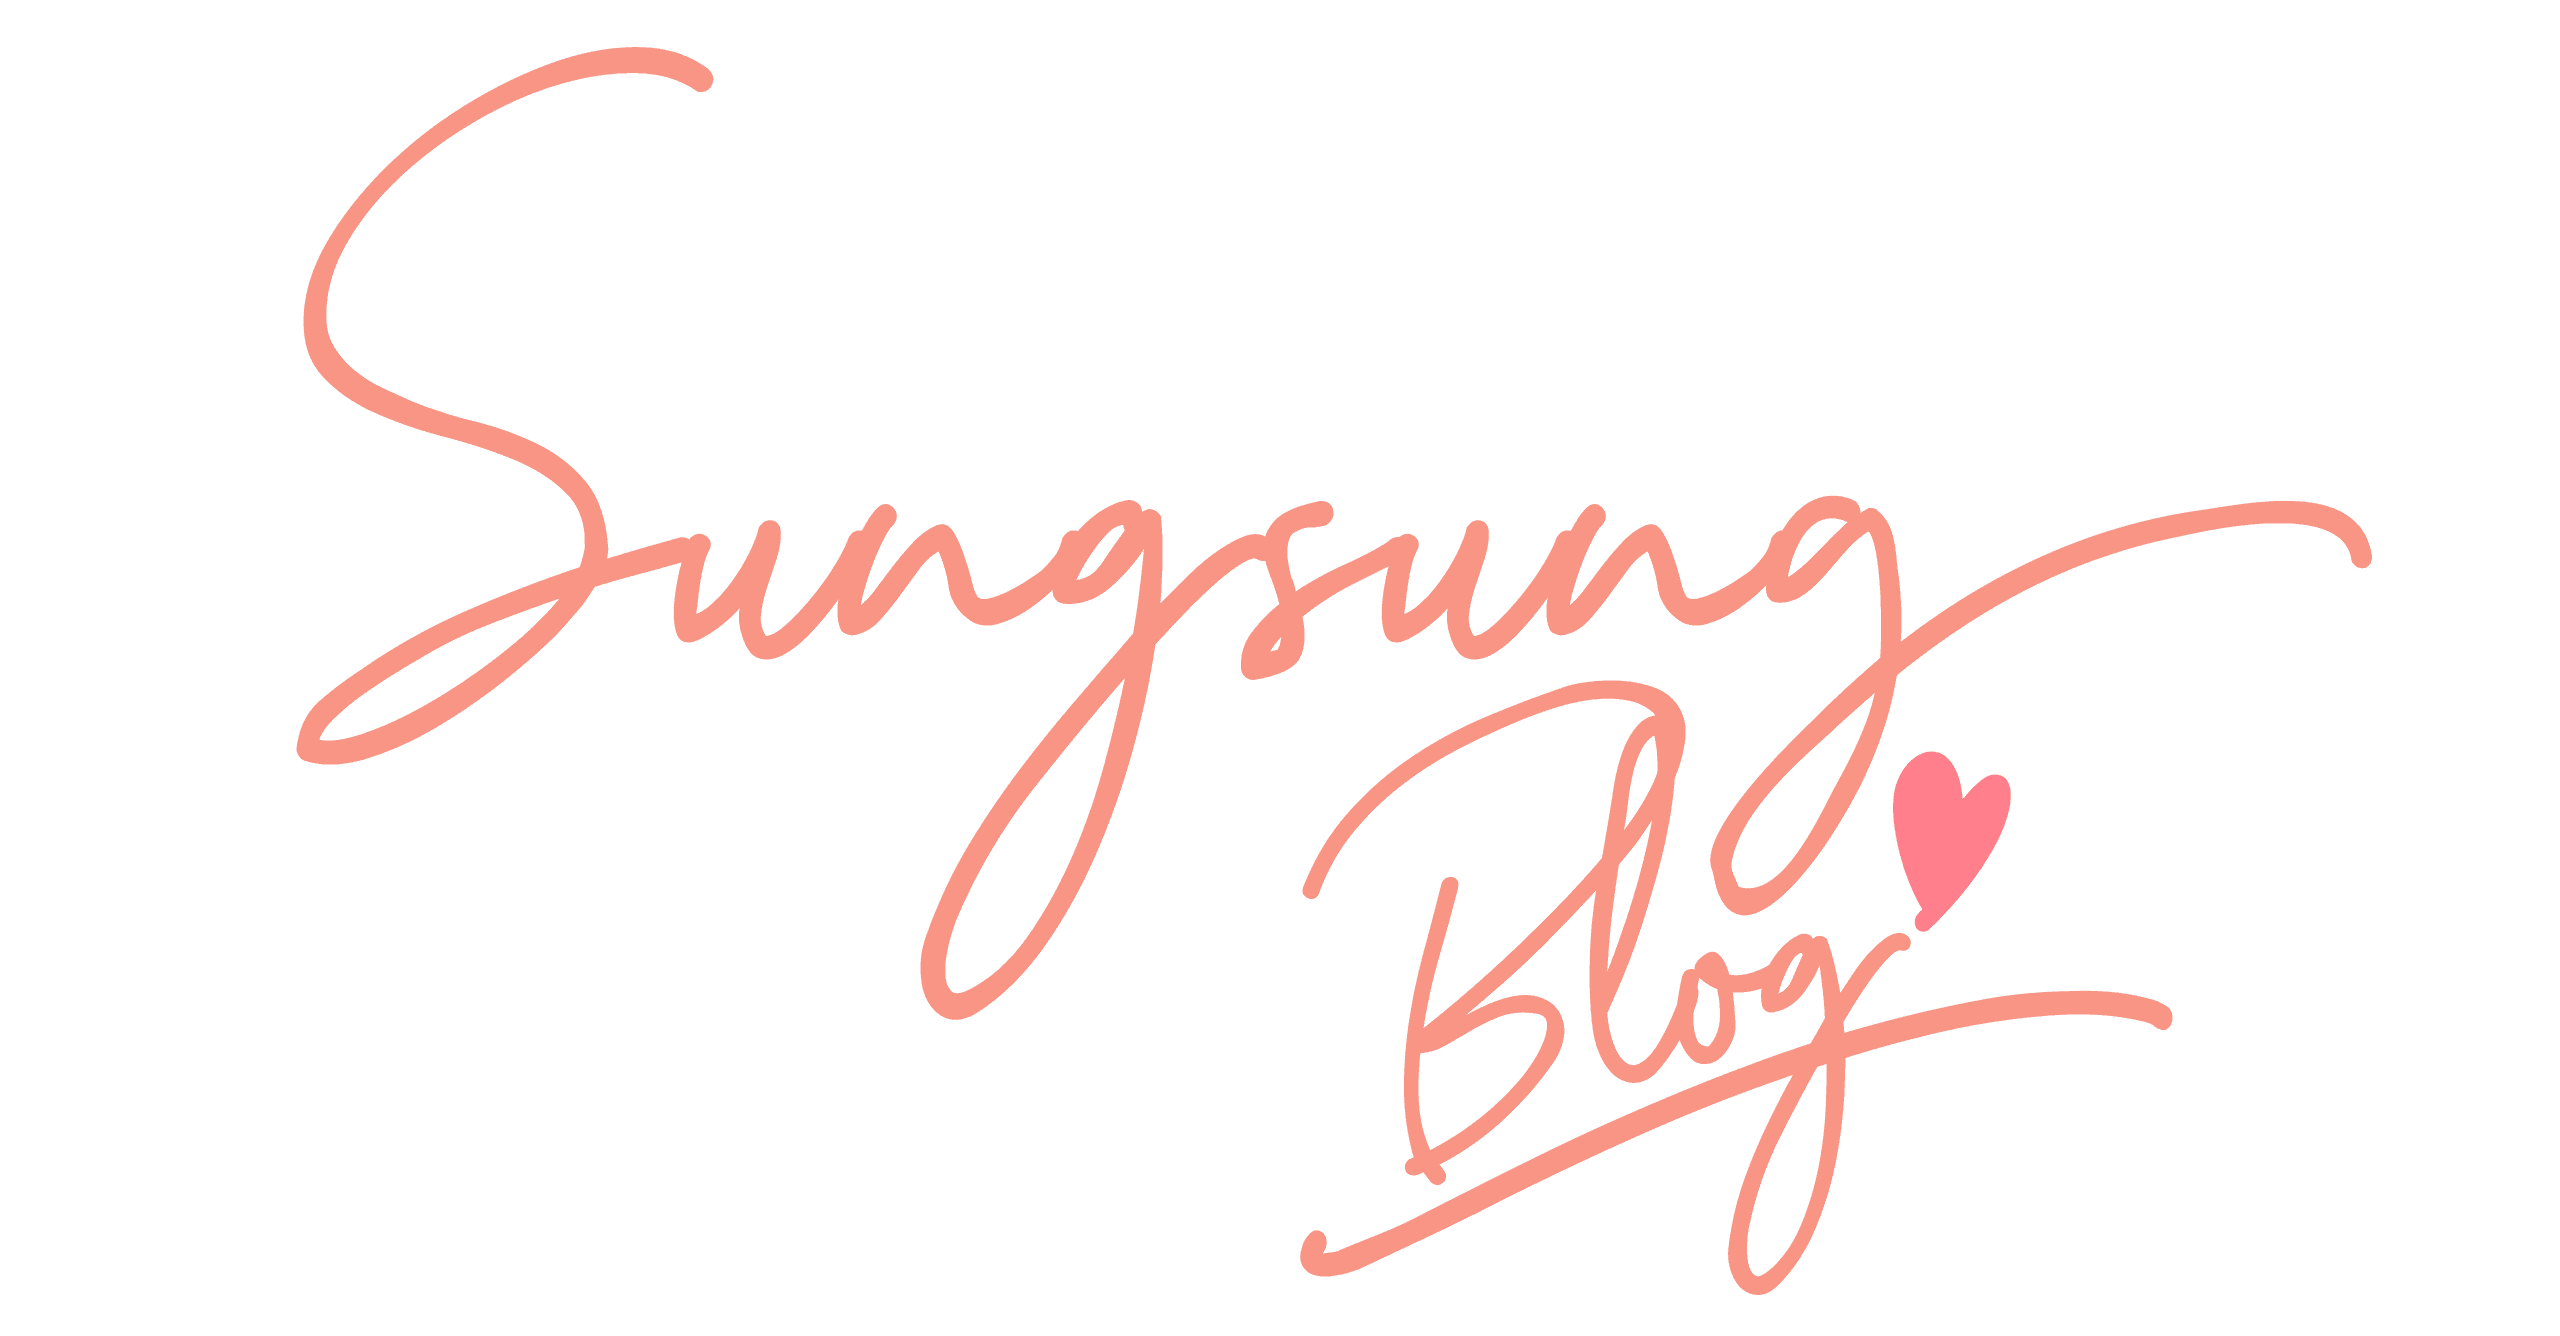 Sungsung-Blog